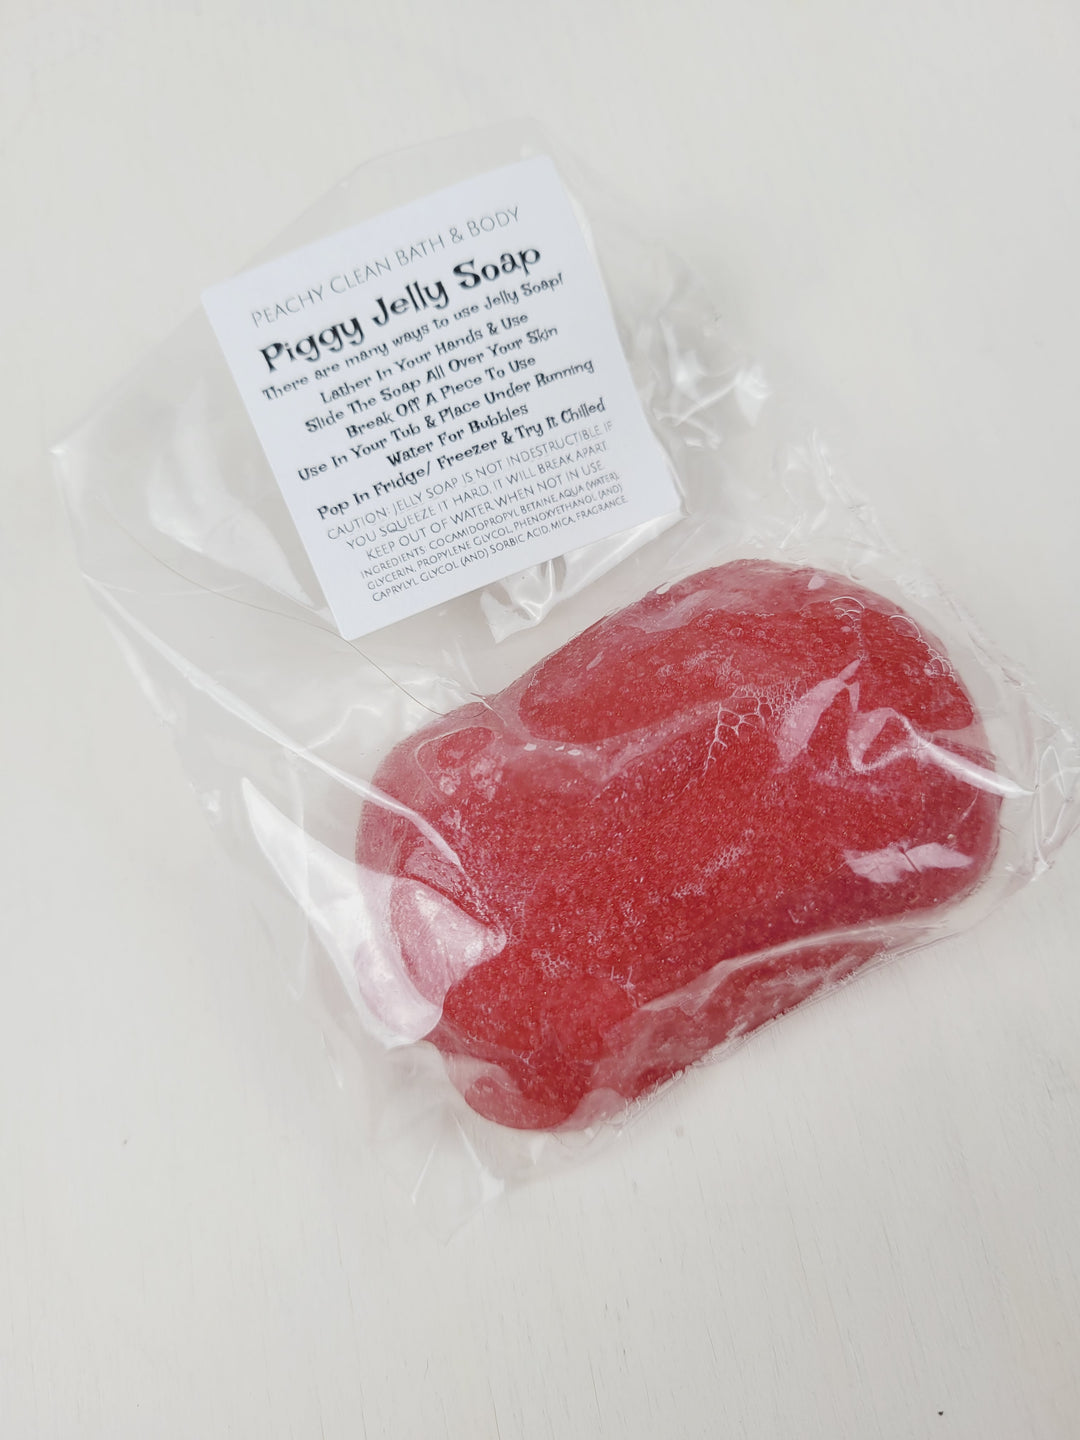 Peachy Clean Bath & Body, Jelly Soaps